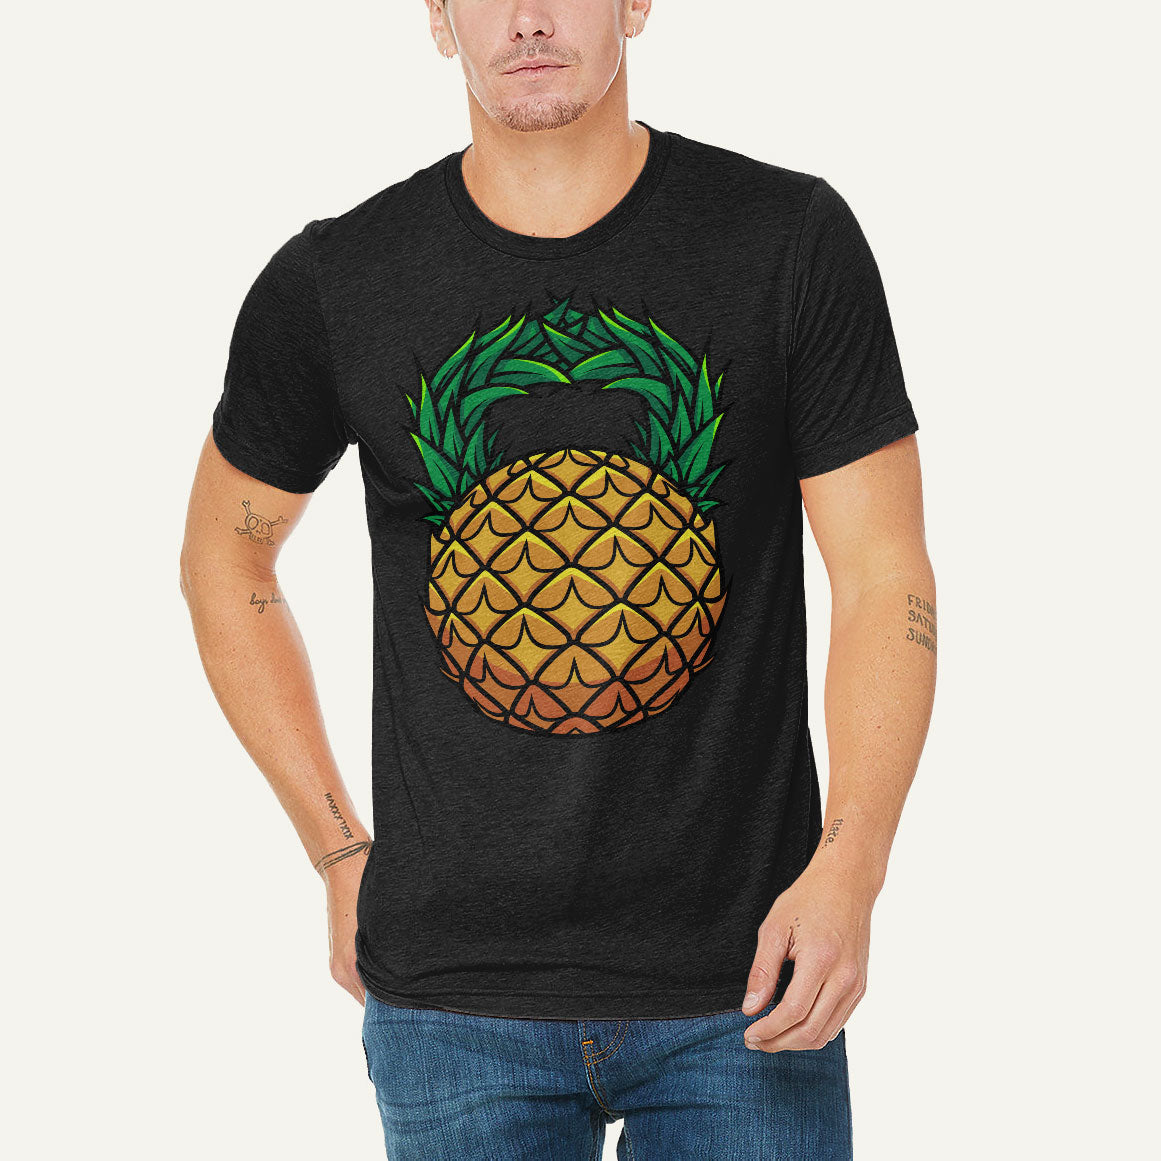 Pineapple Kettlebell Design Men's Triblend T-Shirt